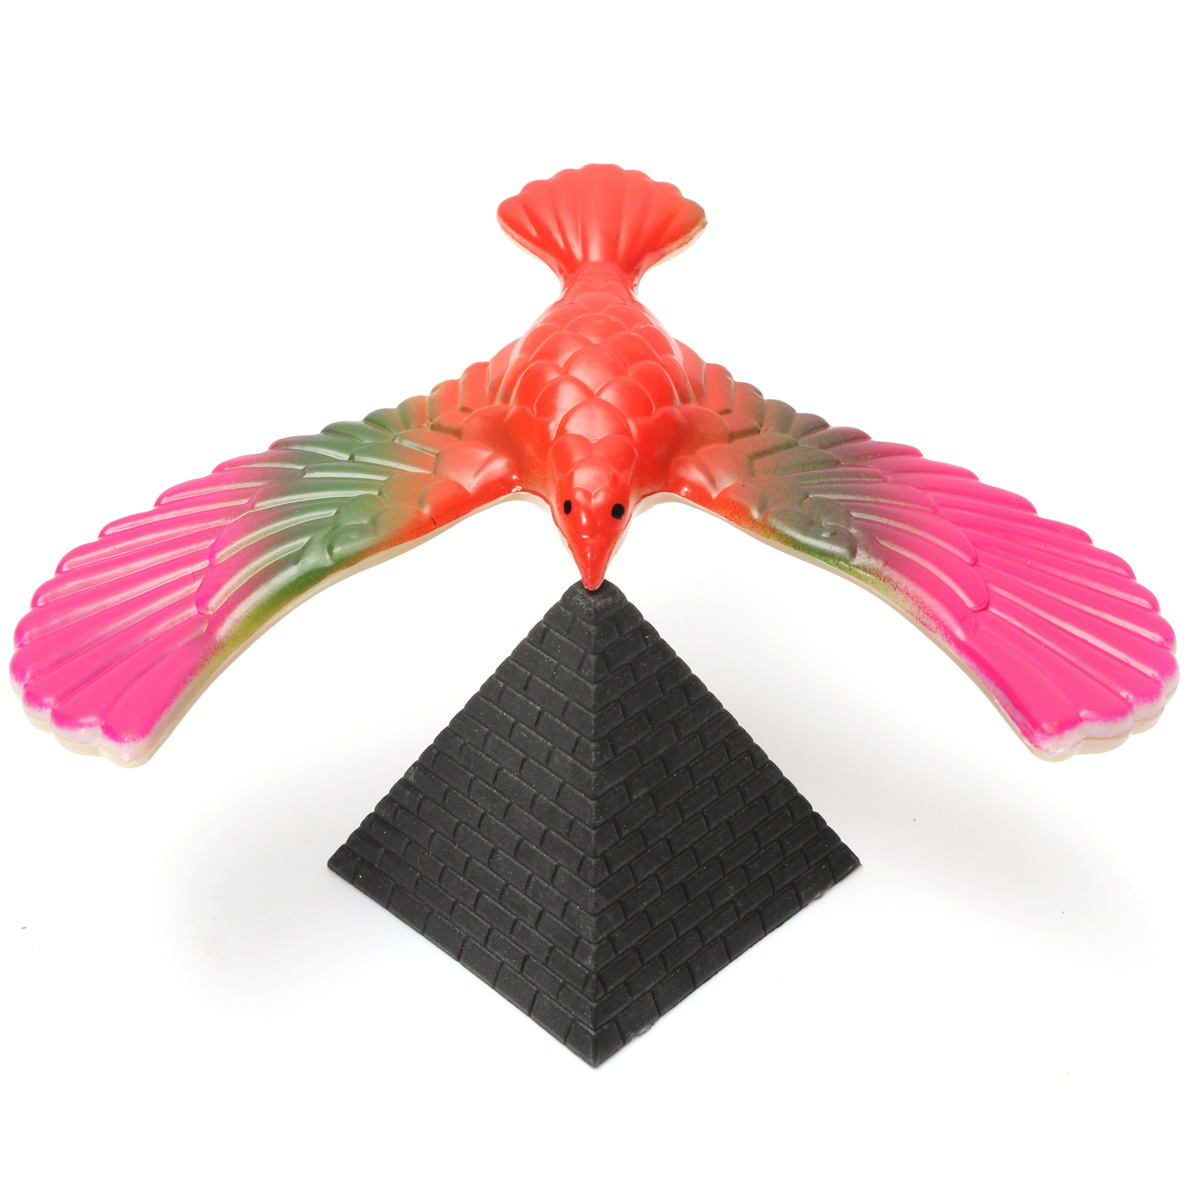 Magic-Balancing-Bird-Science-Desk-Fun-Learning-Gag-Gift-Novelties-Toys-1314694-3